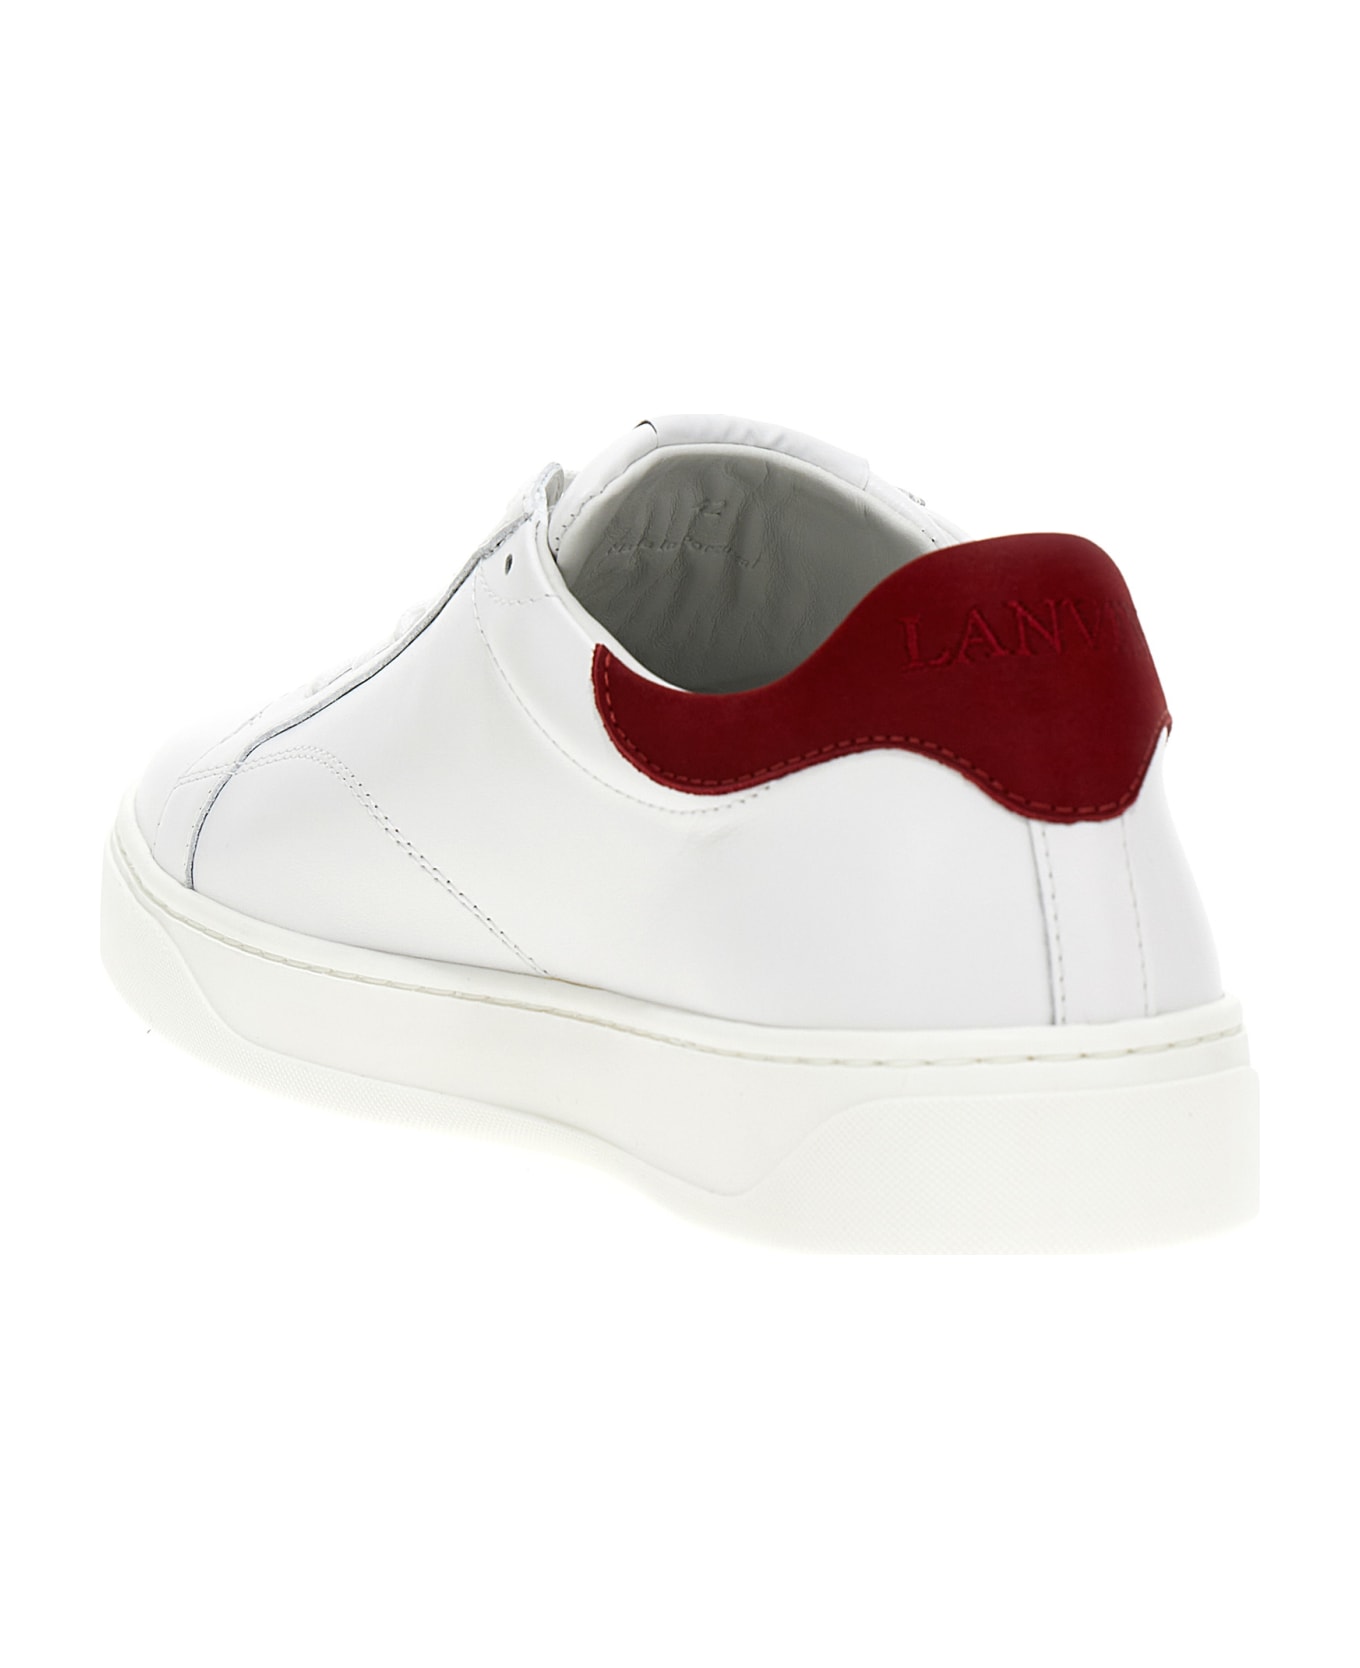 Lanvin 'ddb0' Sneakers - White